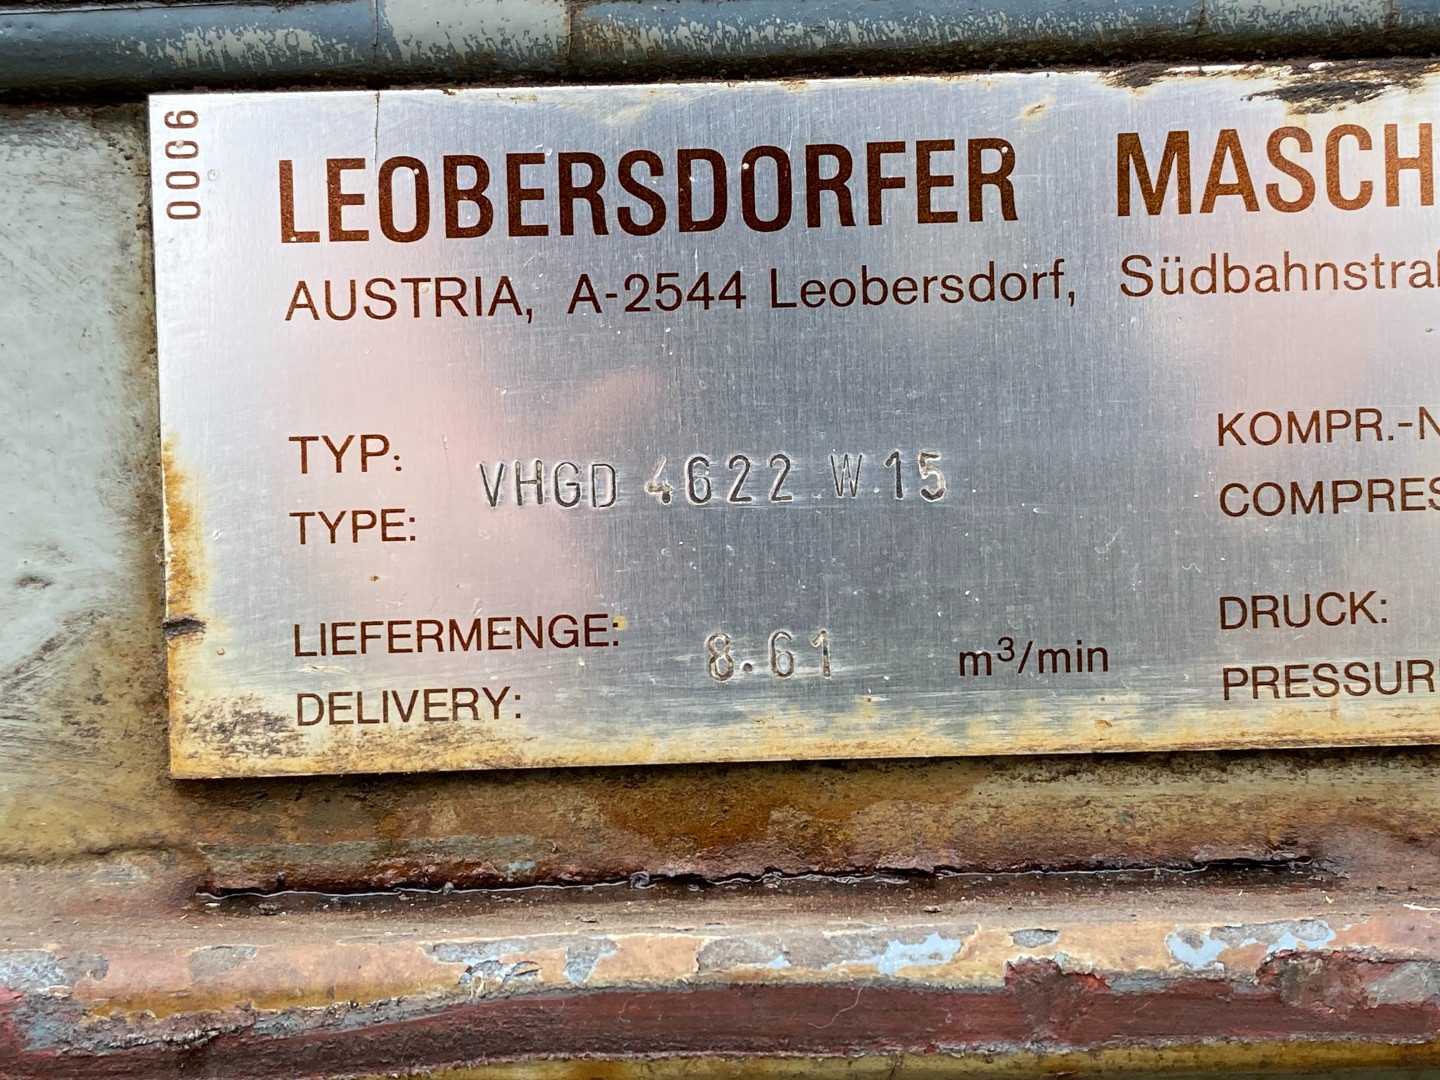 Leobersdorfer Maschinenfabrik AG Wein LMF VHG1 4622 W15 904622067 Air Compressor